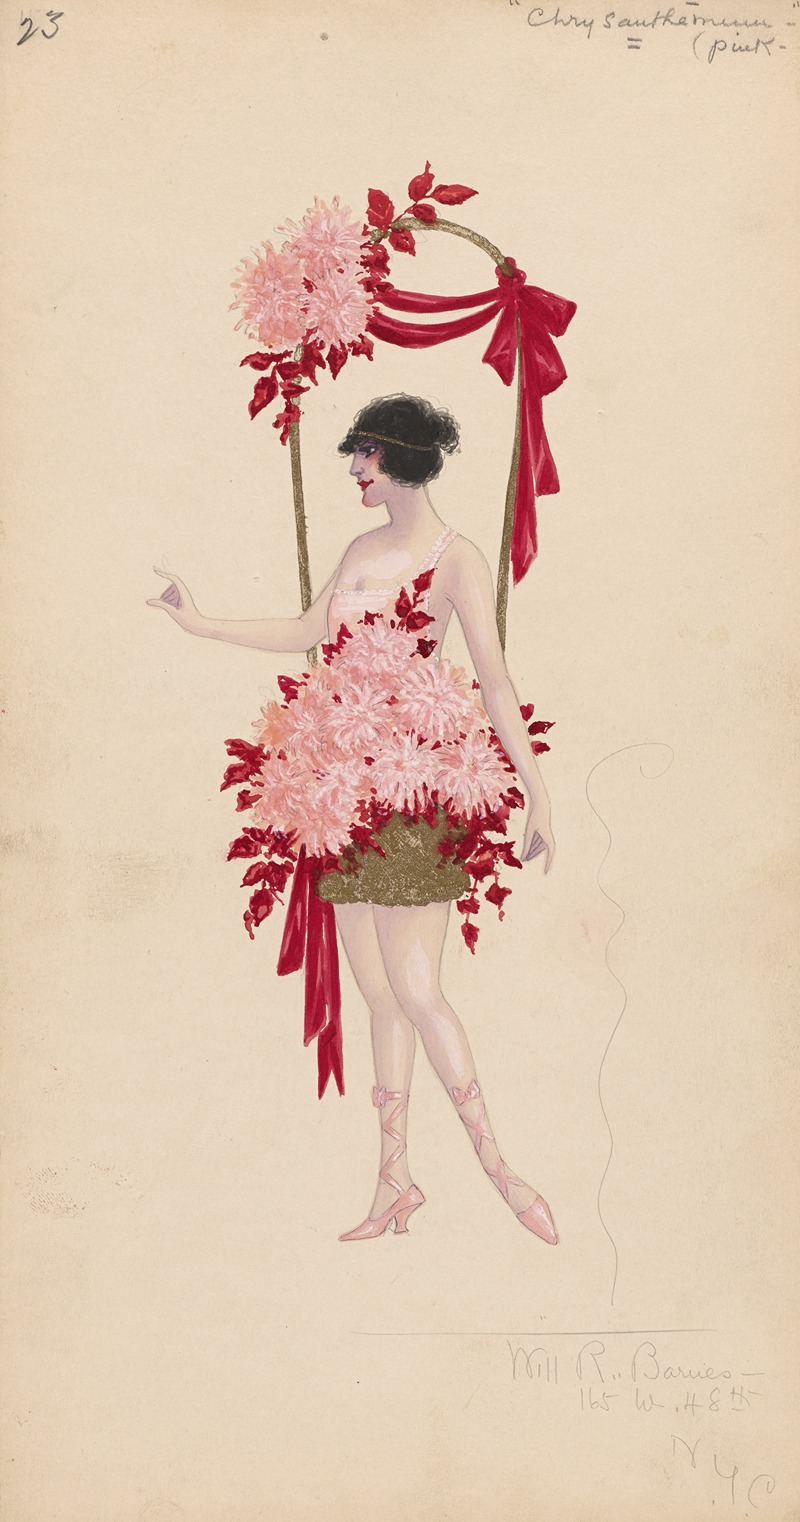 Will R. Barnes - 23-Chrysanthemums (Pink)